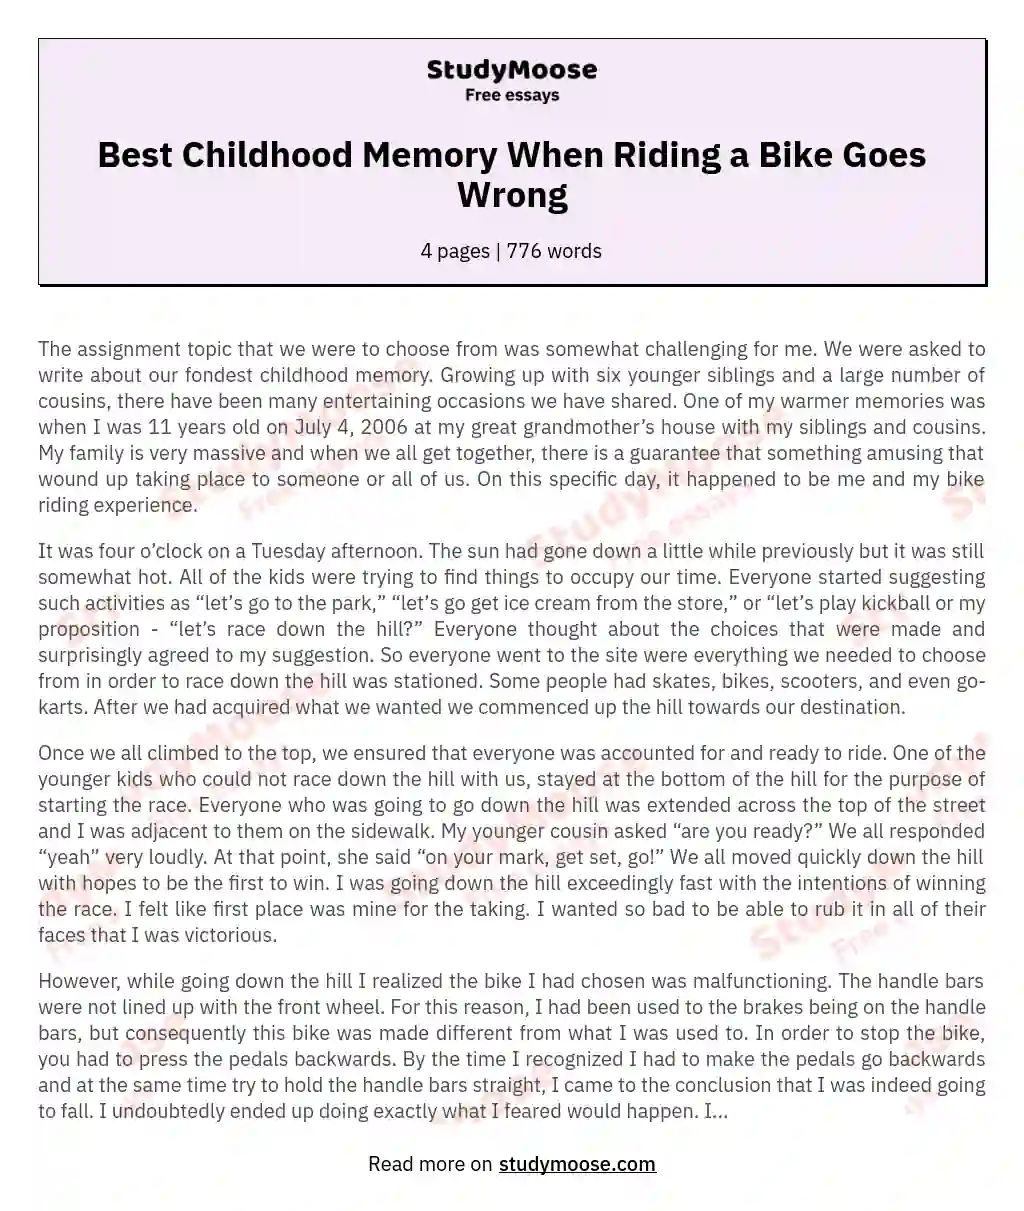 my fondest childhood memories essay